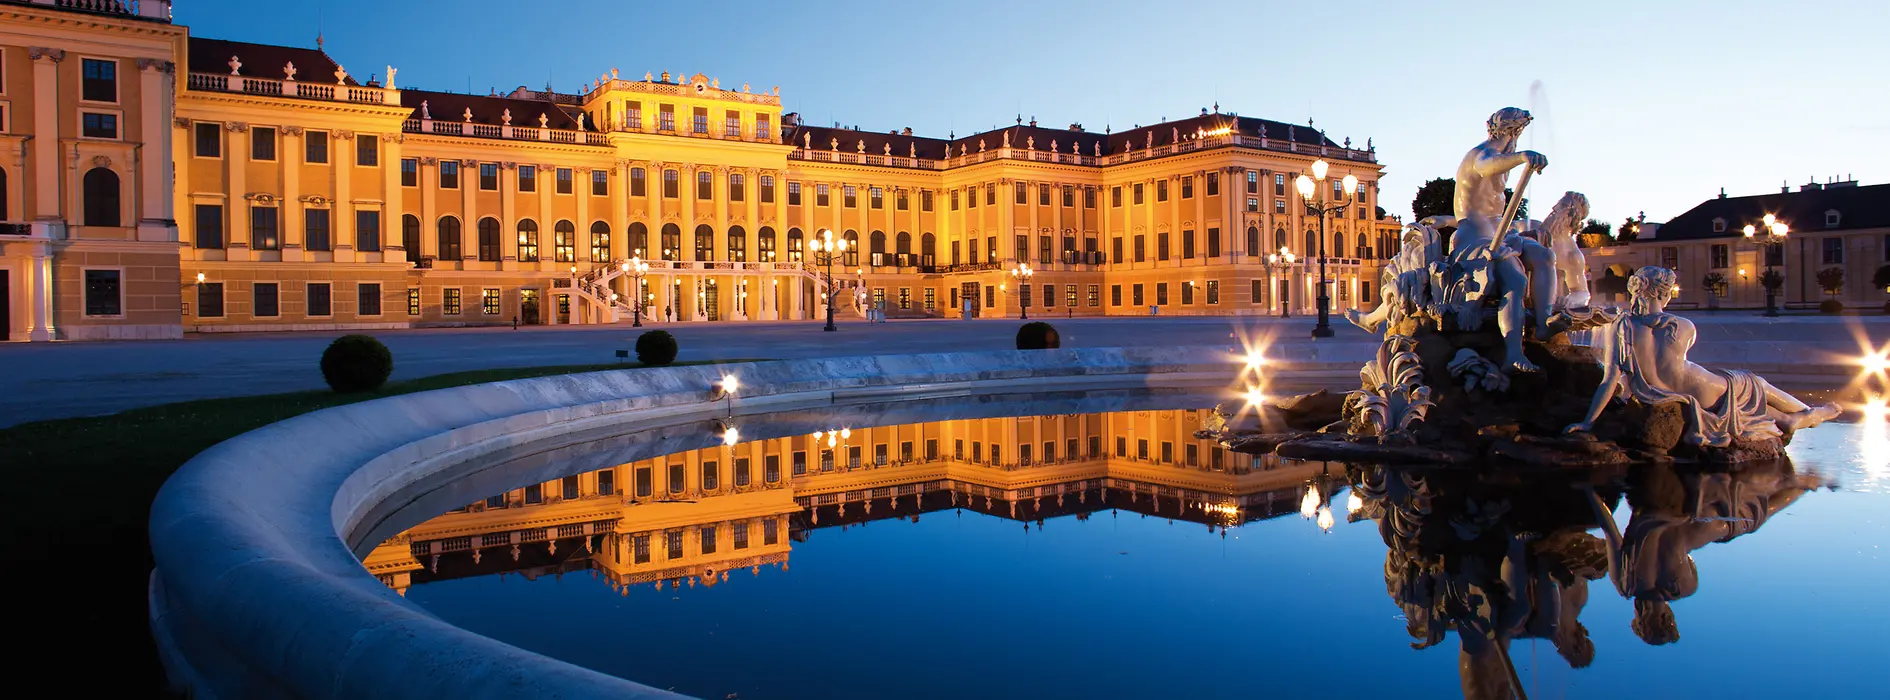 Palacio de Schönbrunn de noche